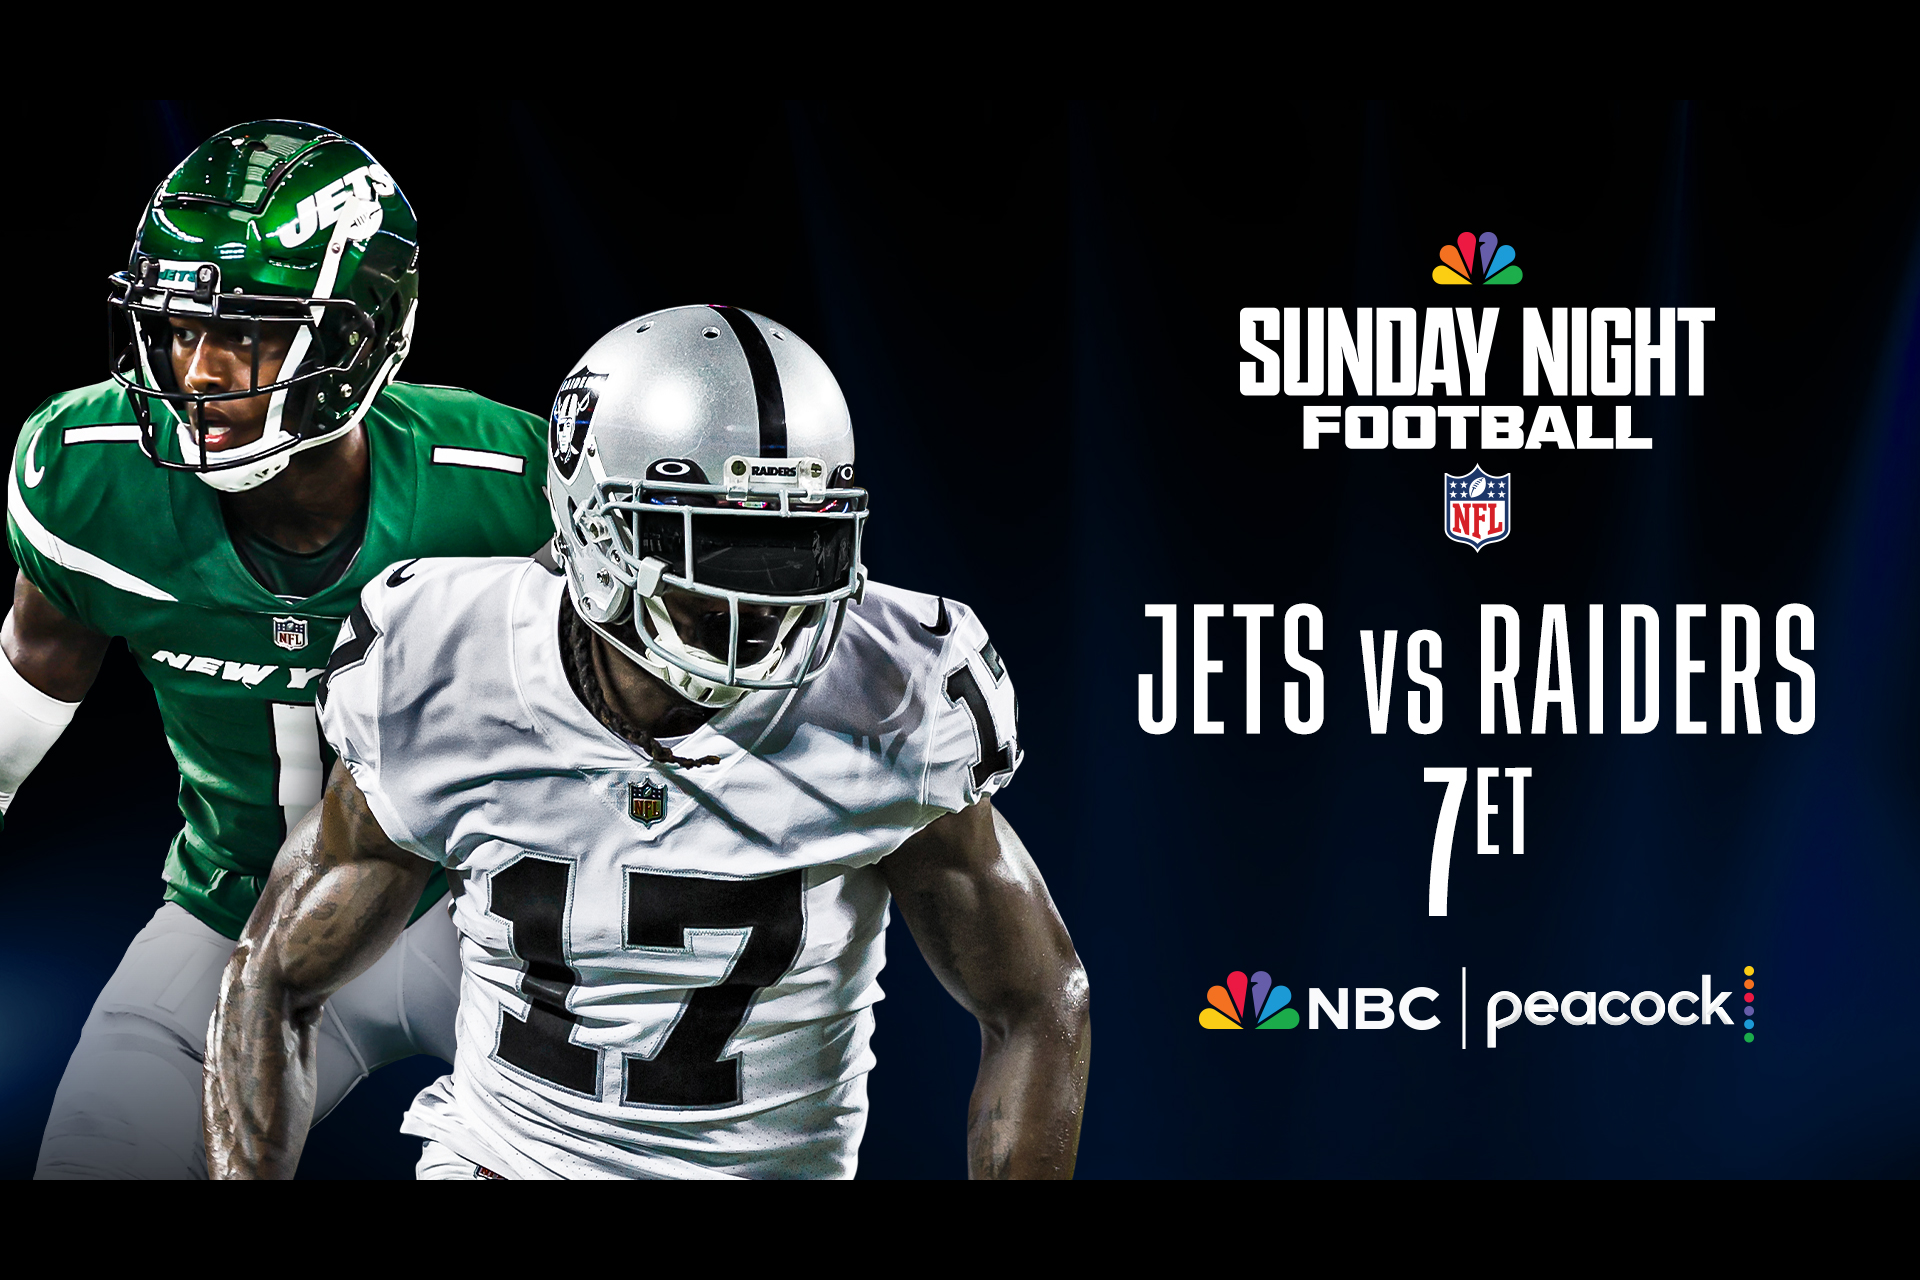 Jets vs. Raiders on Sunday Night Football on Peacock and NBC